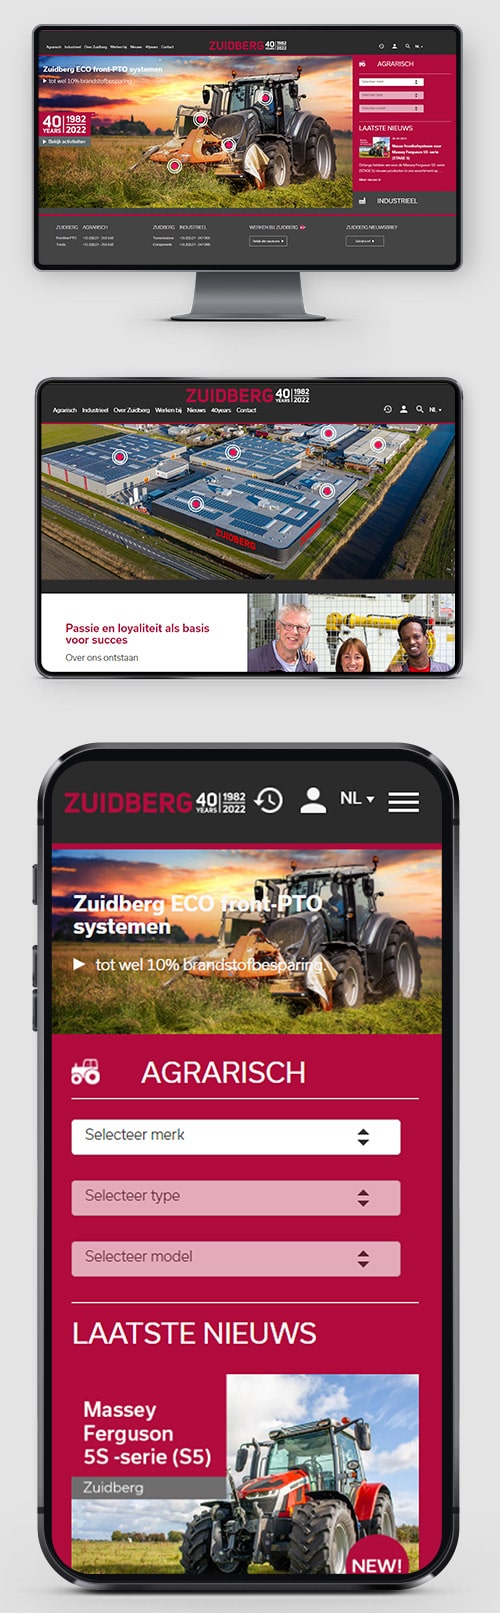 Zuidberg website